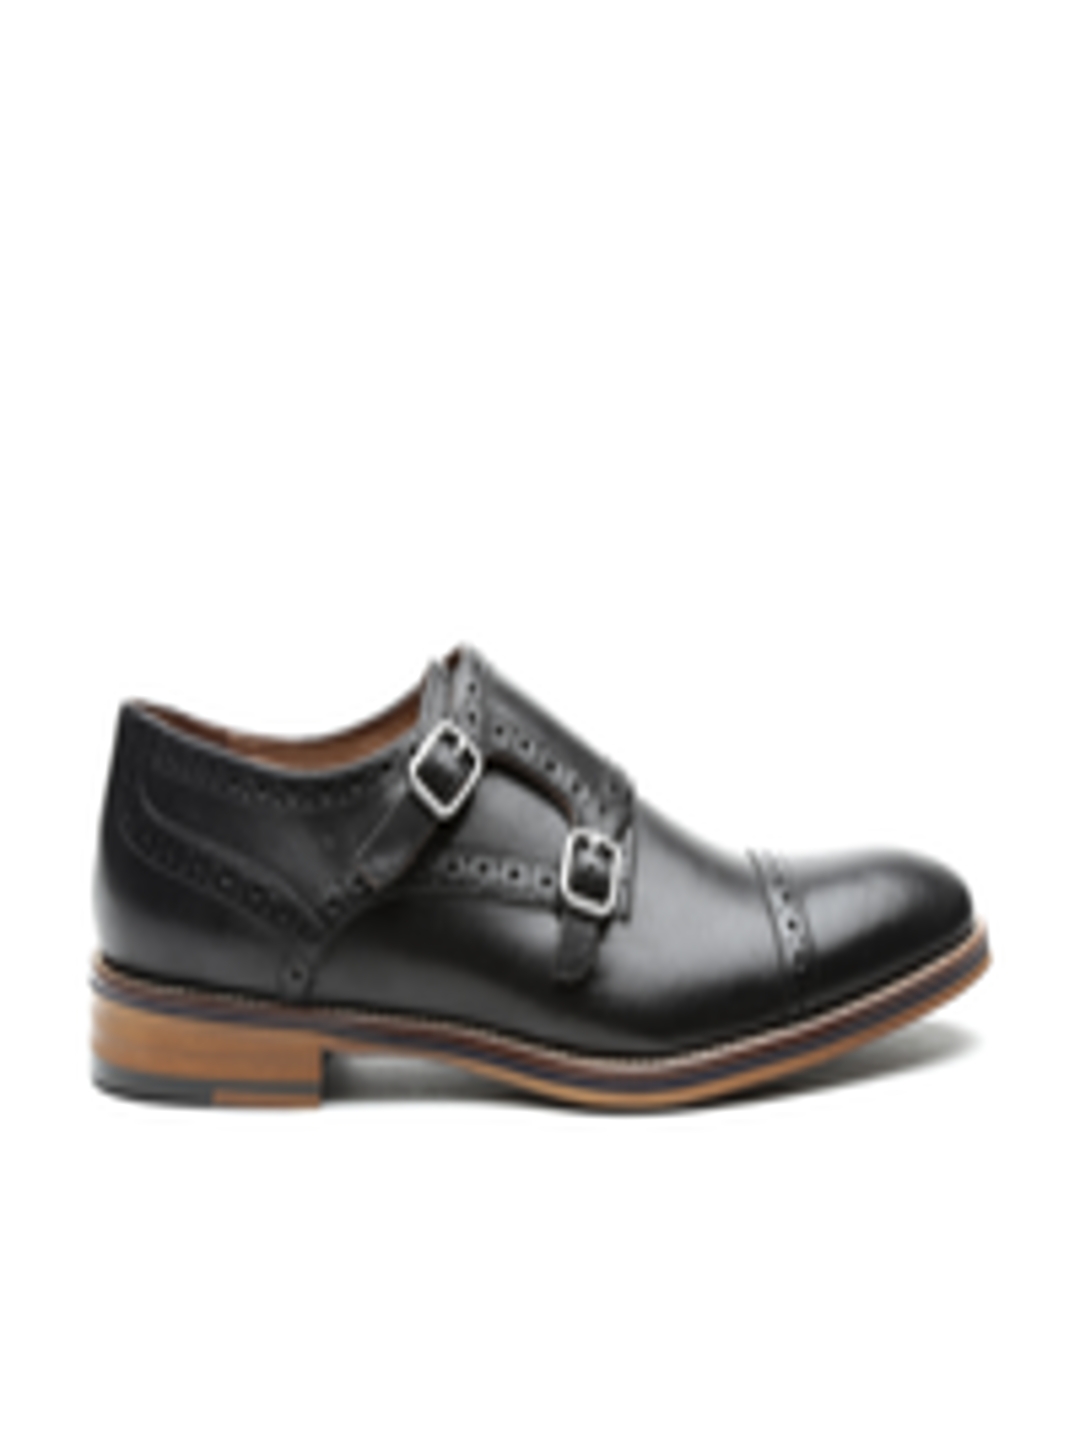 Buy JOHNSTON & MURPHY Men Black Leather Monks - Formal Shoes for Men ...